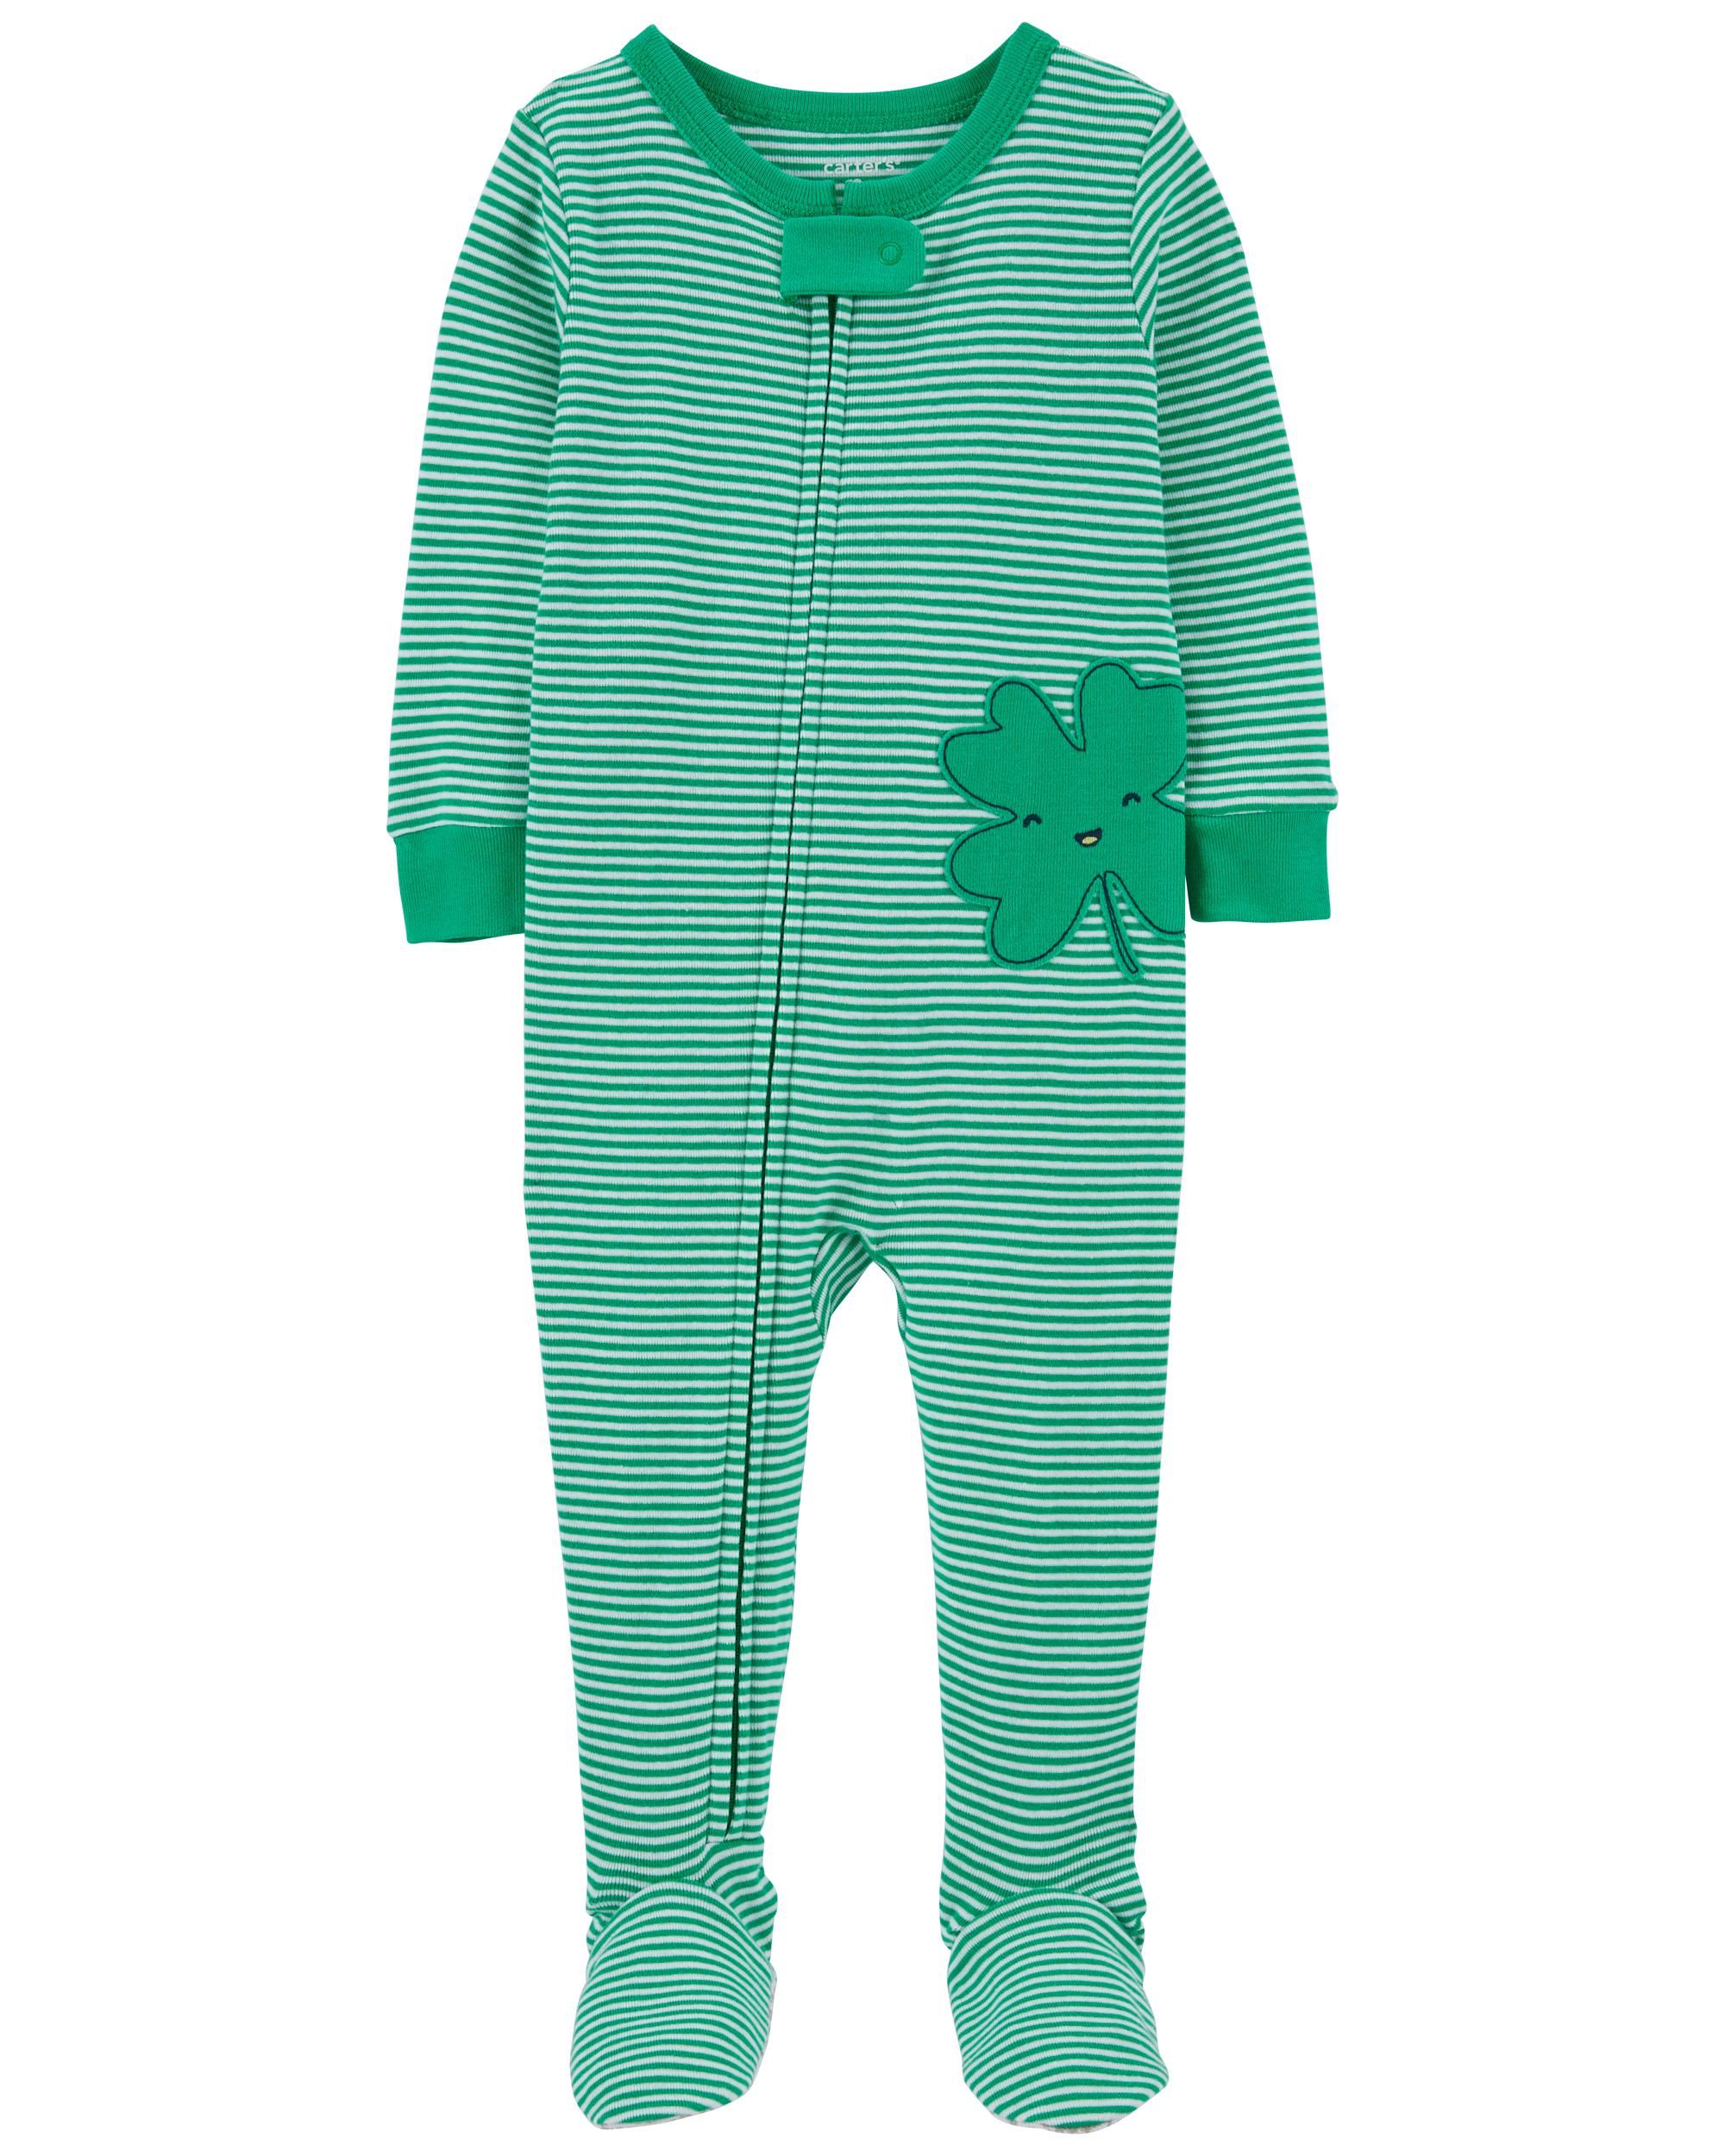 Green Toddler 1-Piece St. Patrick's Day 100% Snug Fit Cotton Footie PJs | carters.com | Carter's